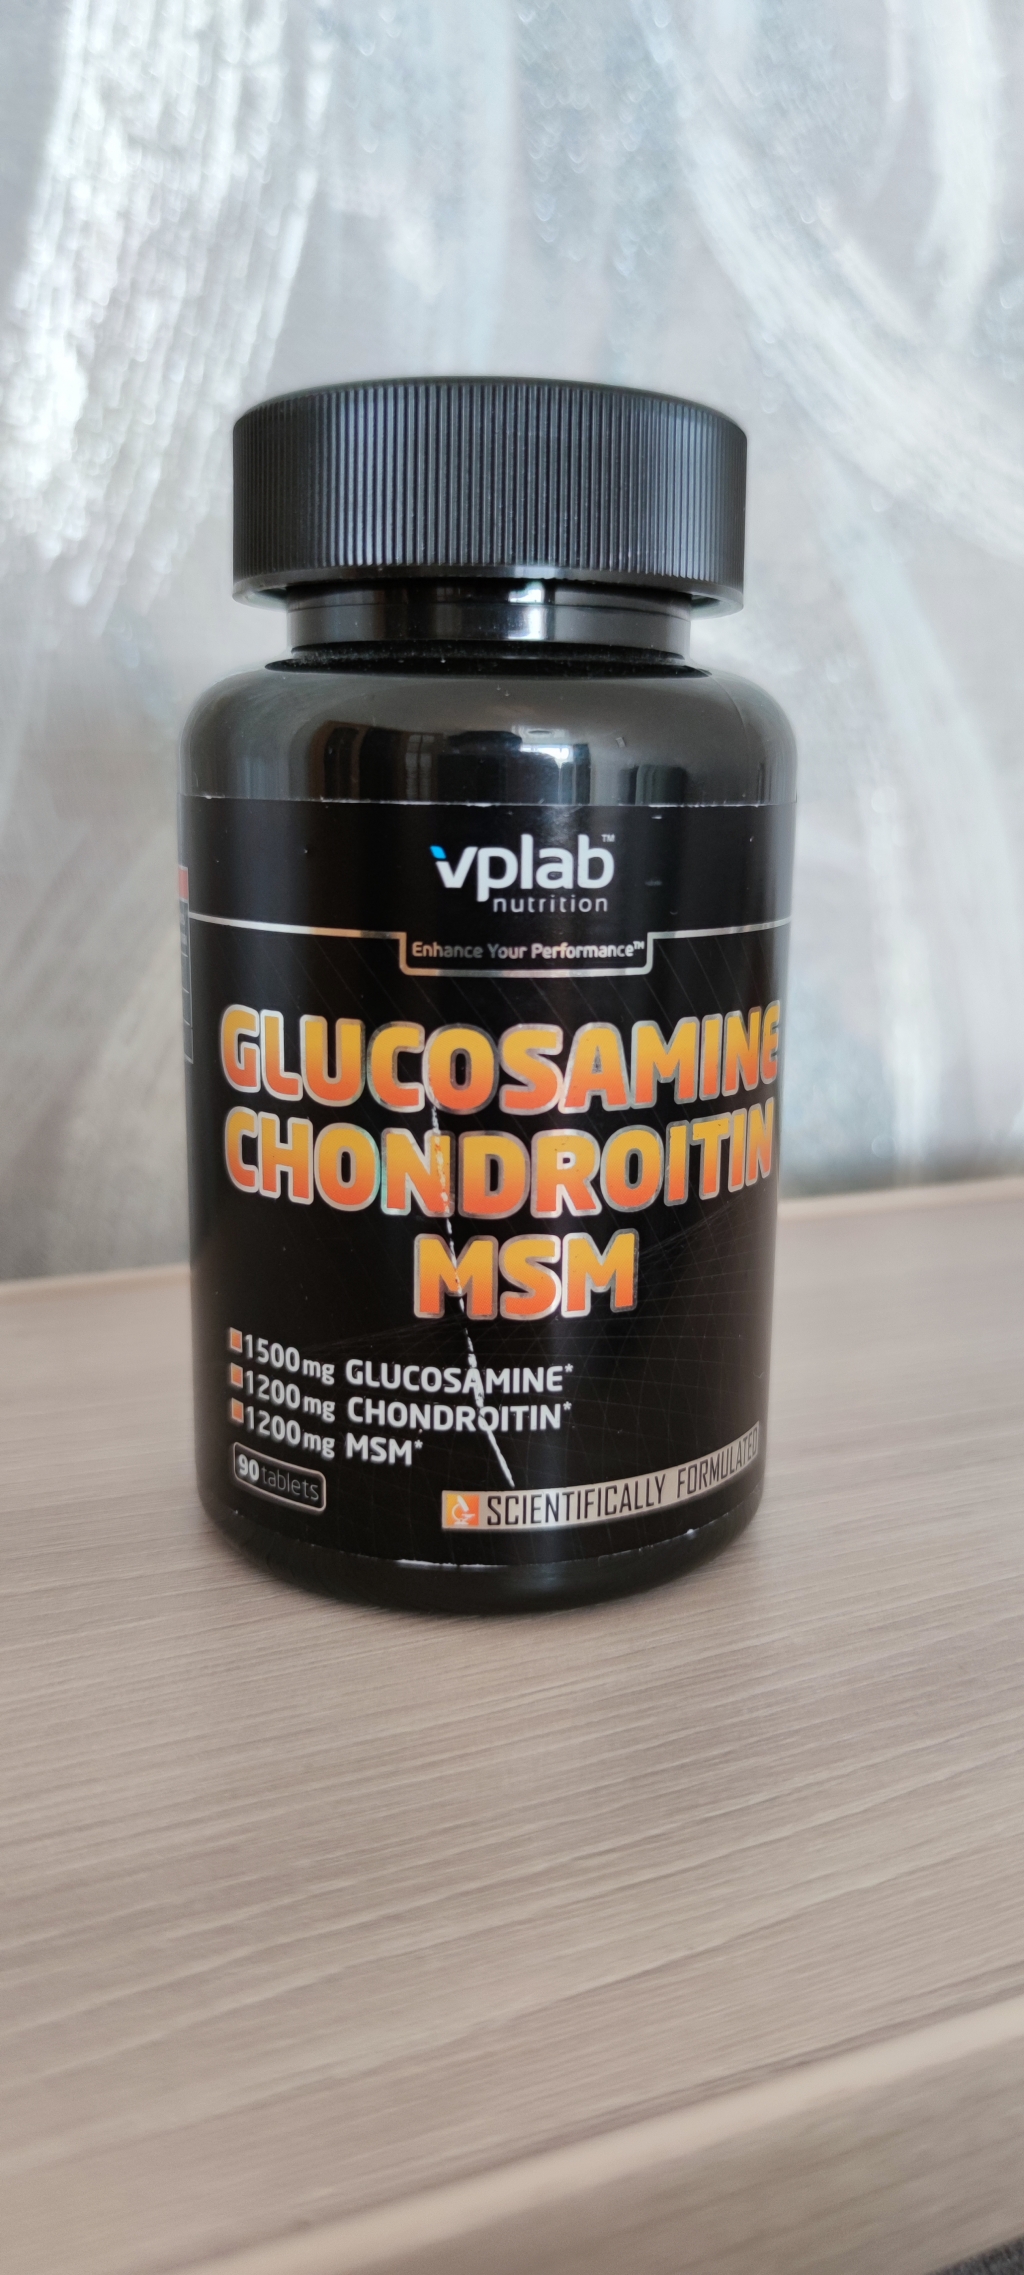 Glucosamine & Chondroitin & MSM от VPLAB - Помощь суставам